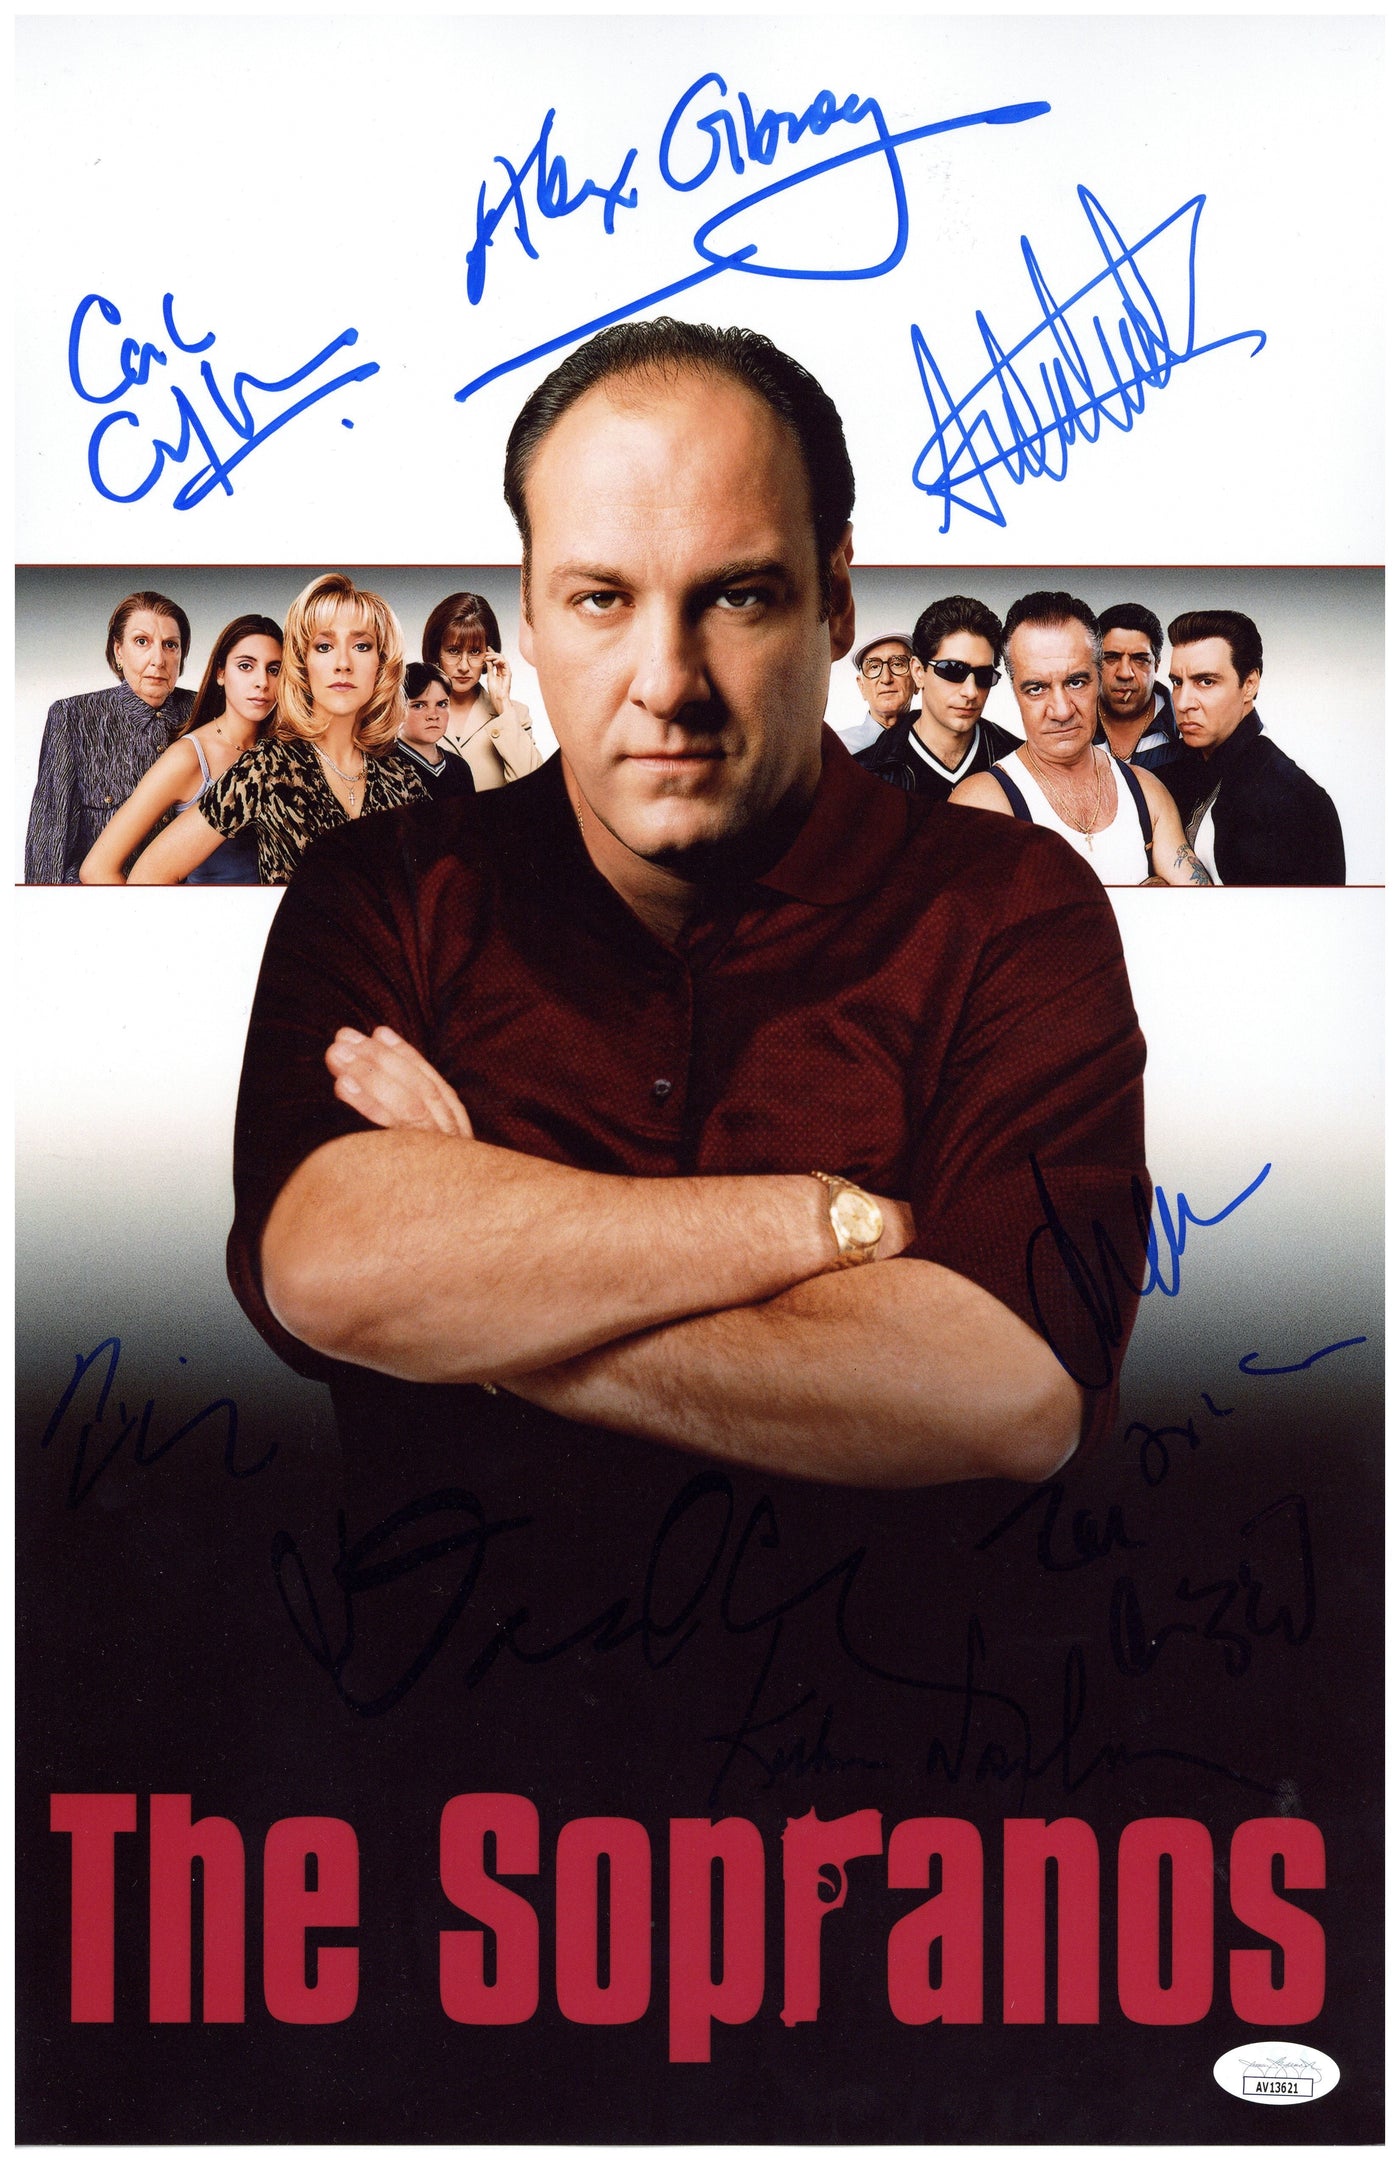 Sopranos Cast Signed 11x17 Photo Signed by 9 Autographed JSA COA #1